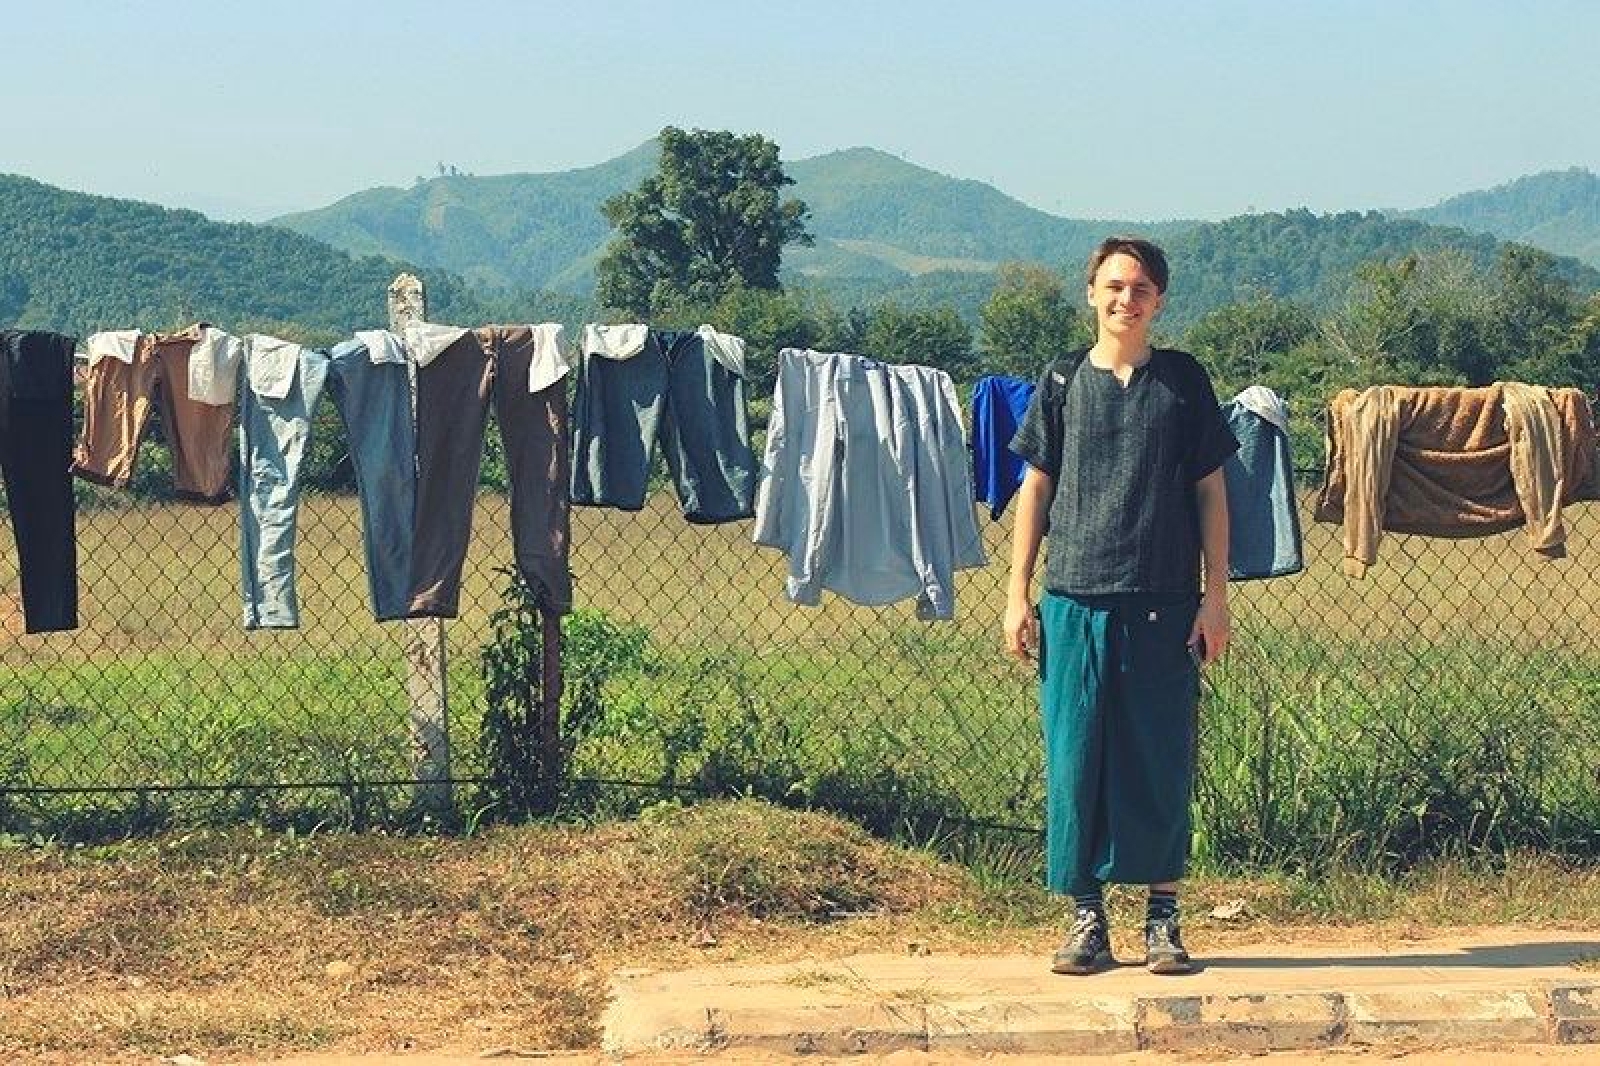 Roman in Laos, 2015